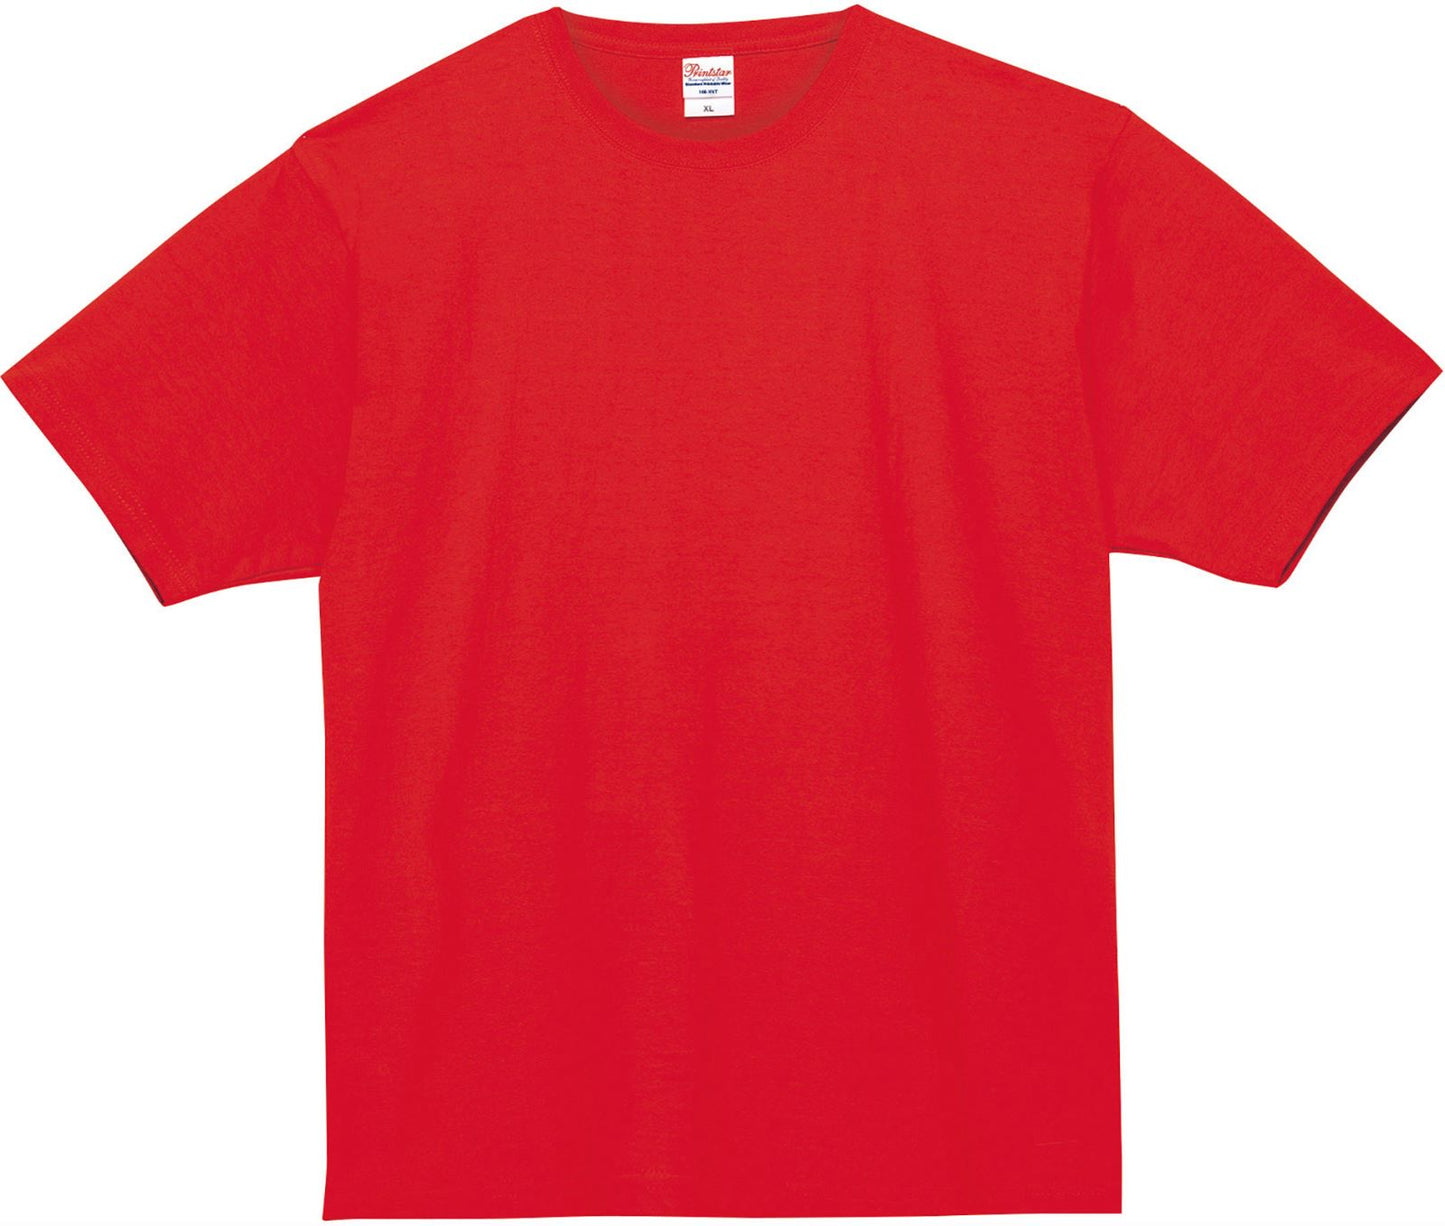 Printstar [*00148-HVT] 7.4 oz Super Heavy Weight T-shirts